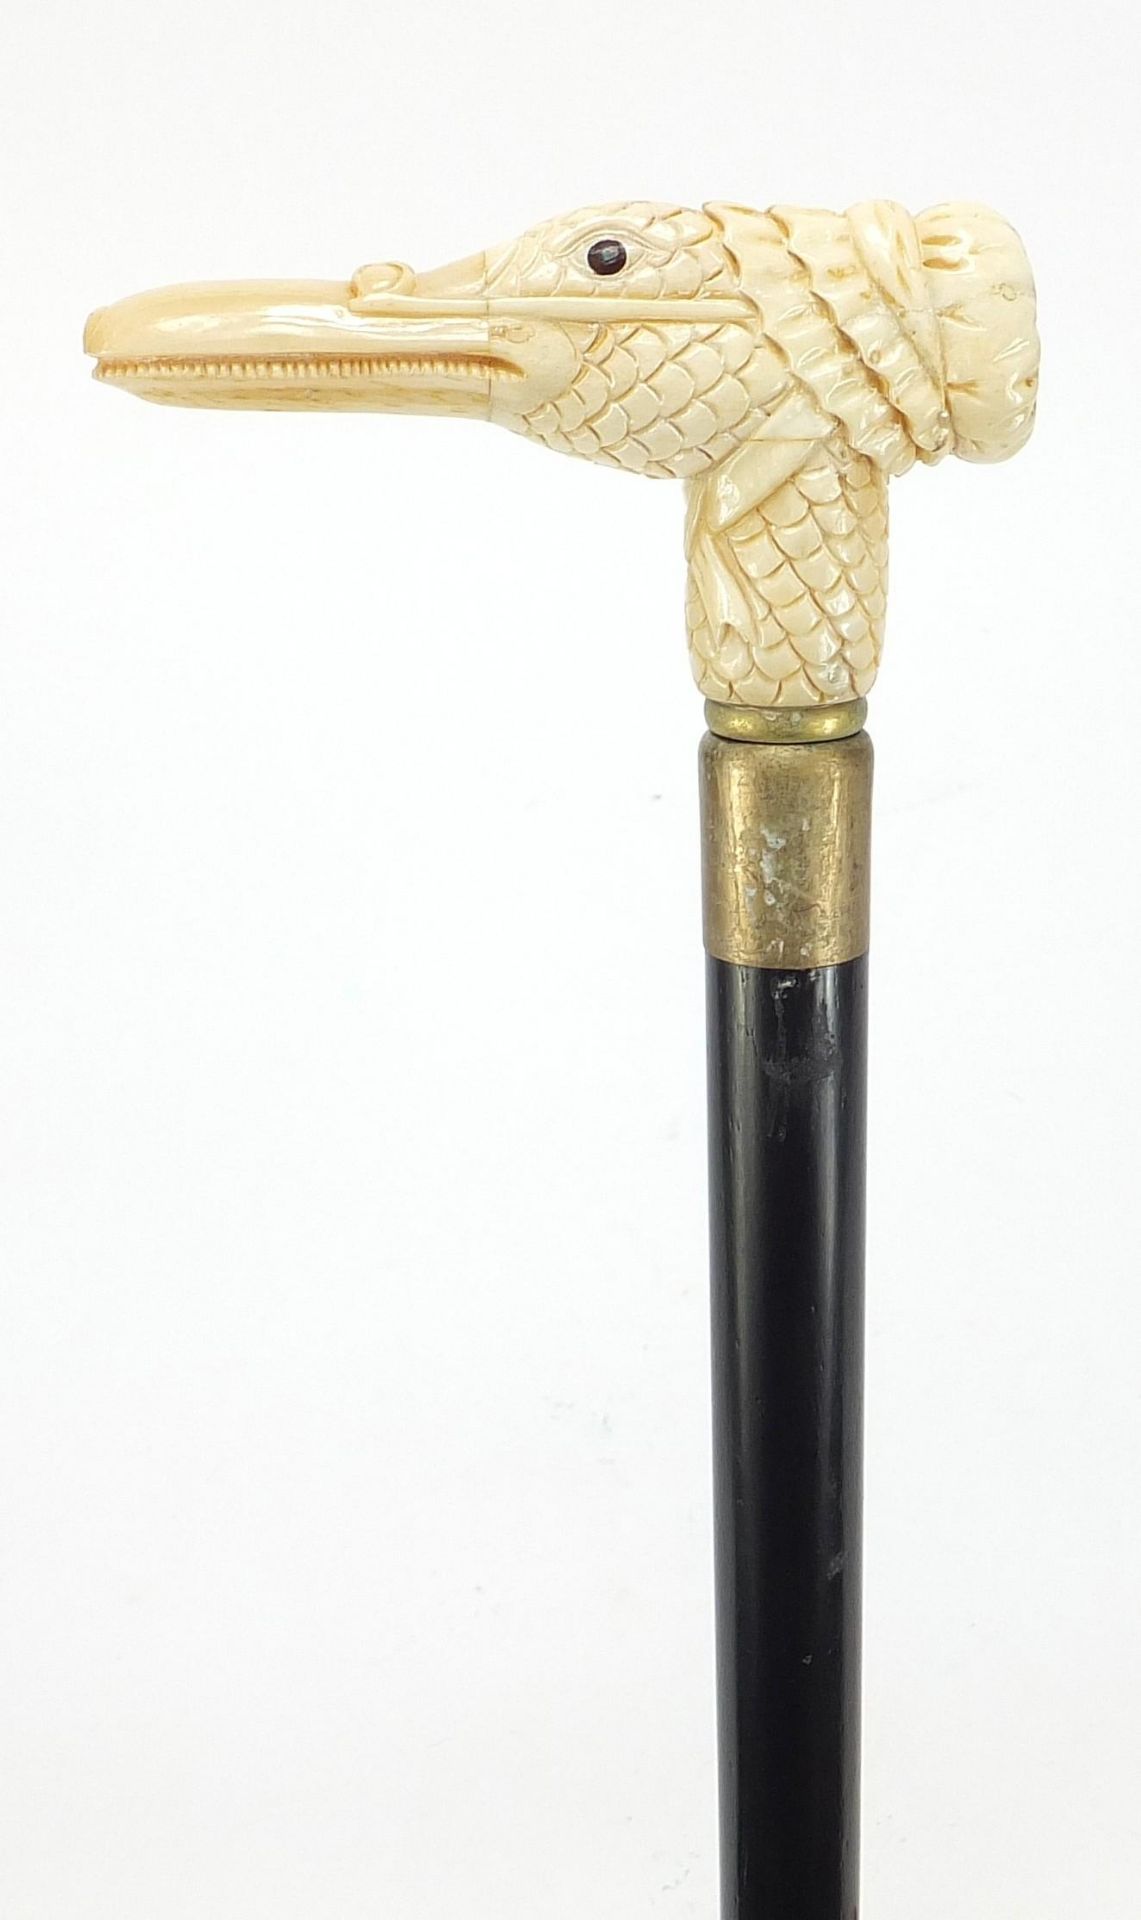 Hardwood walking stick with carved bone duck design handle, 91.5cm in length : - Image 5 of 6